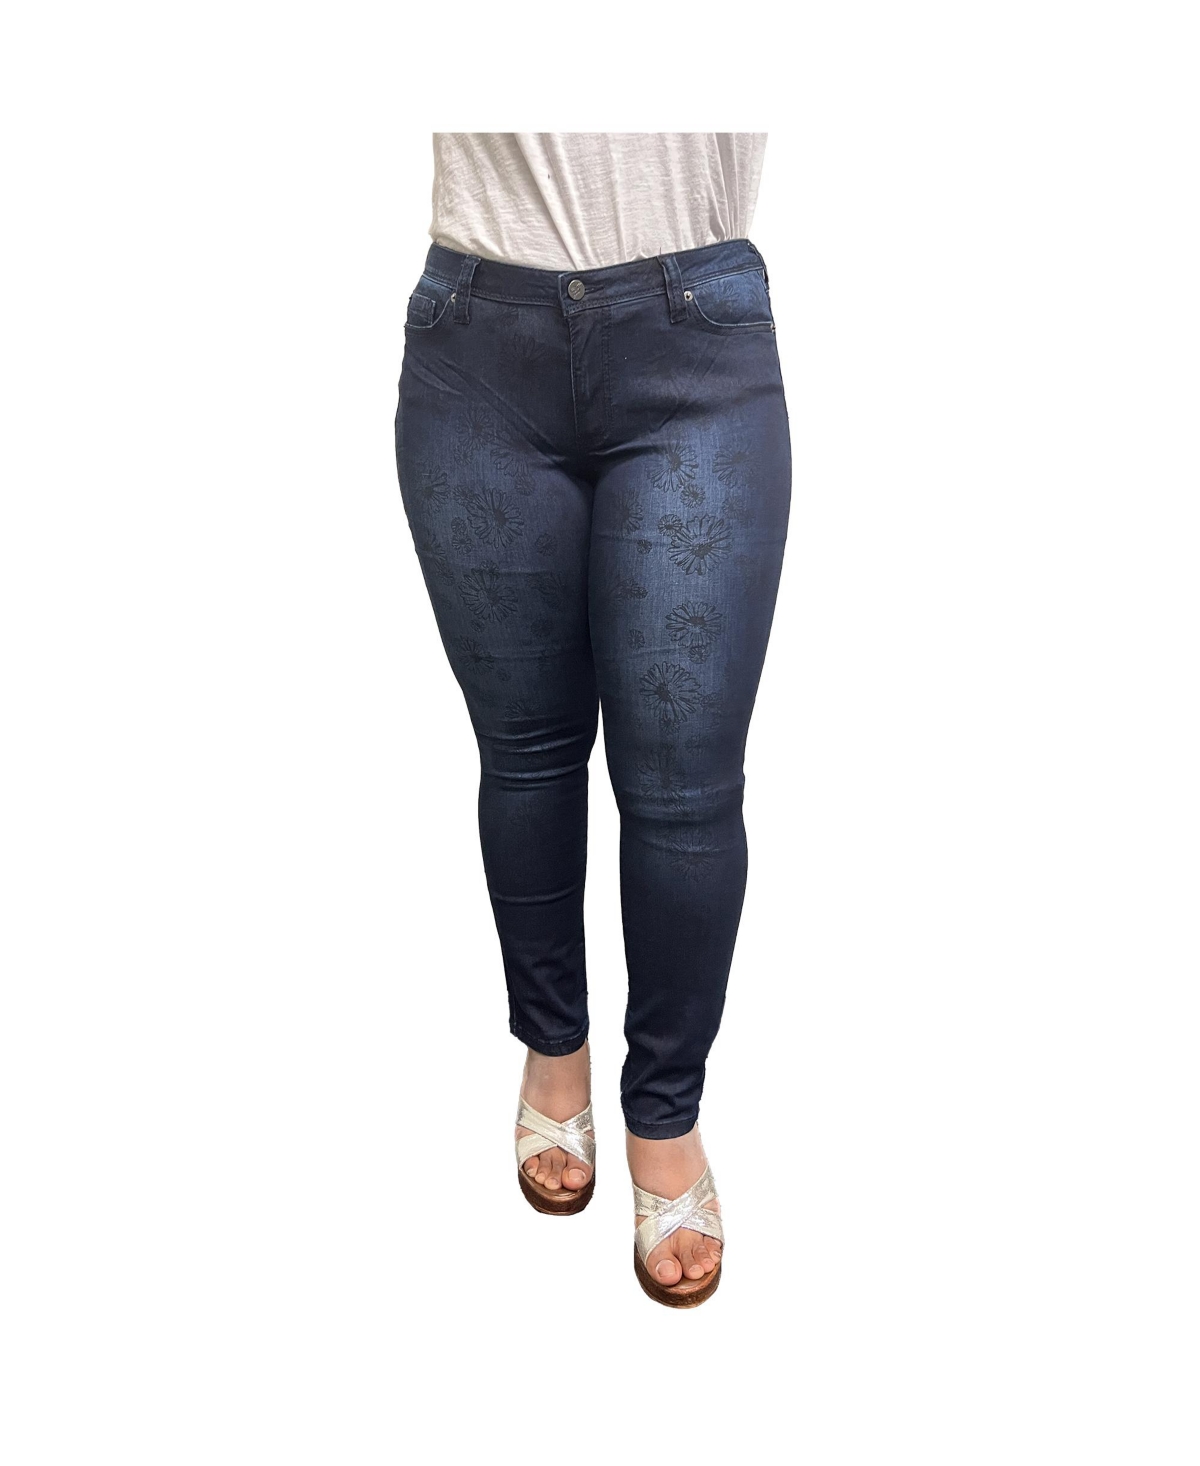 Women's Curvy Fit Stretch Denim Blasted Daisy Printed Mid-Rise Skinny Jeans - Blue daisy print